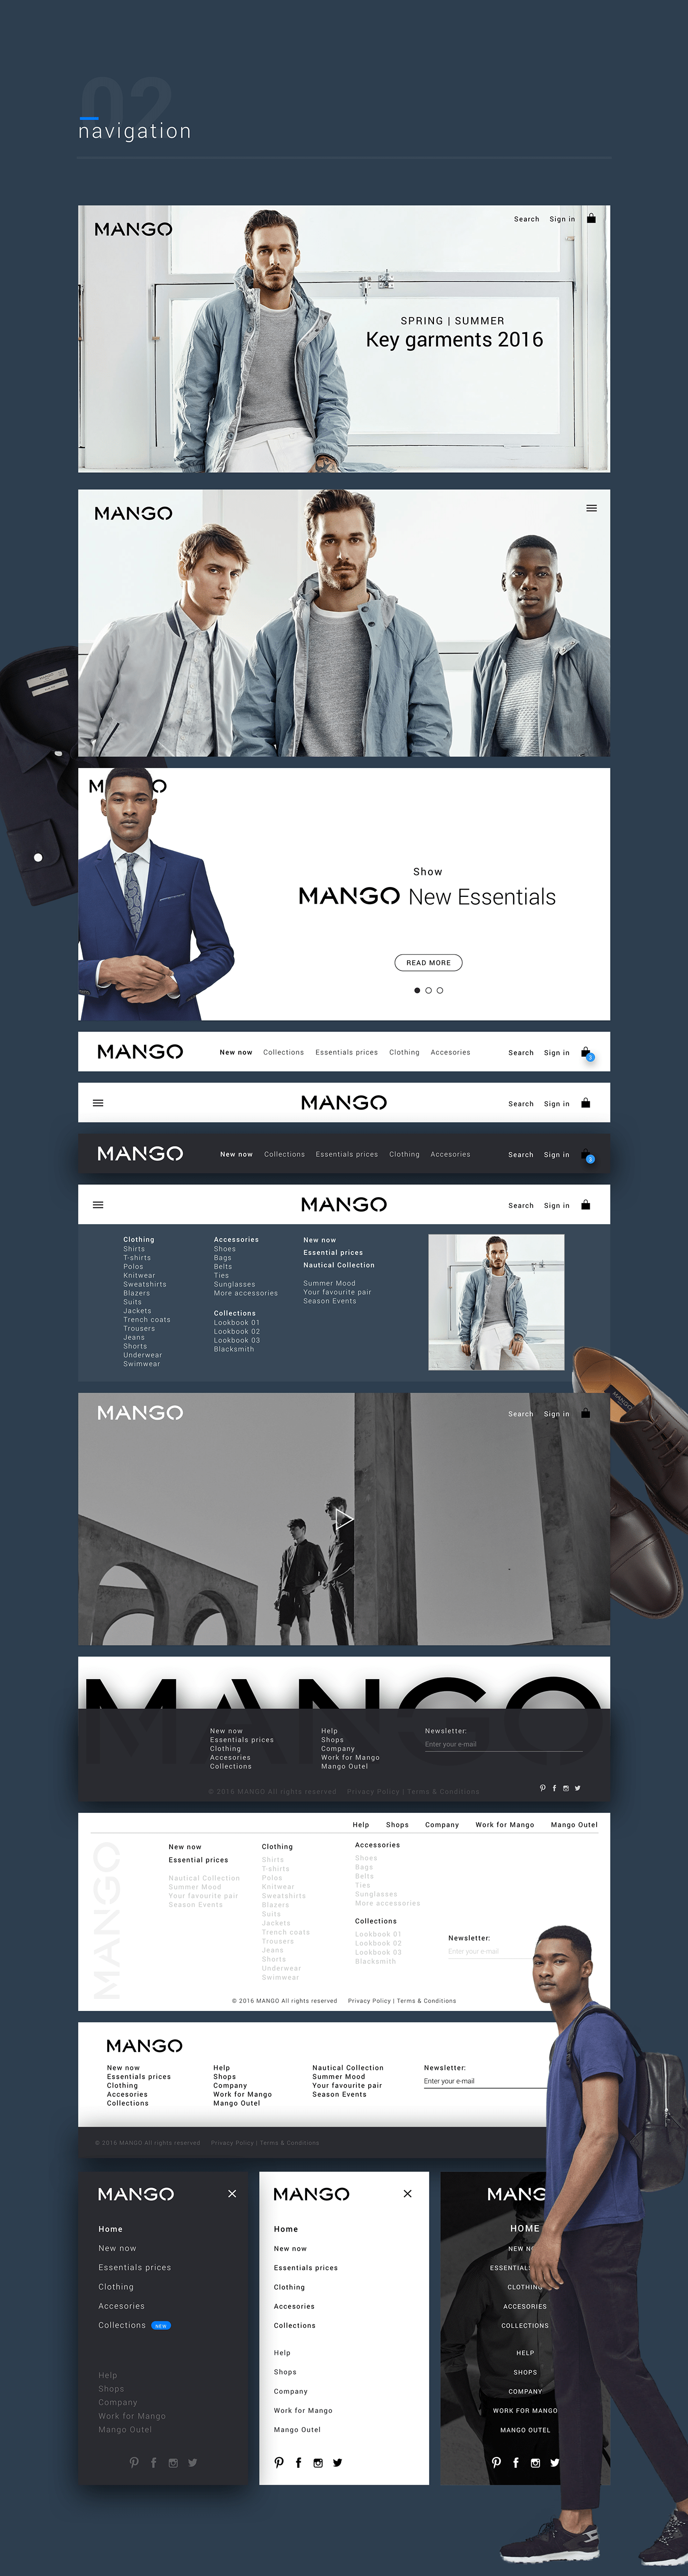 Ecommerce redesign user interface Interface kit Mango shop ui kit user experience Website